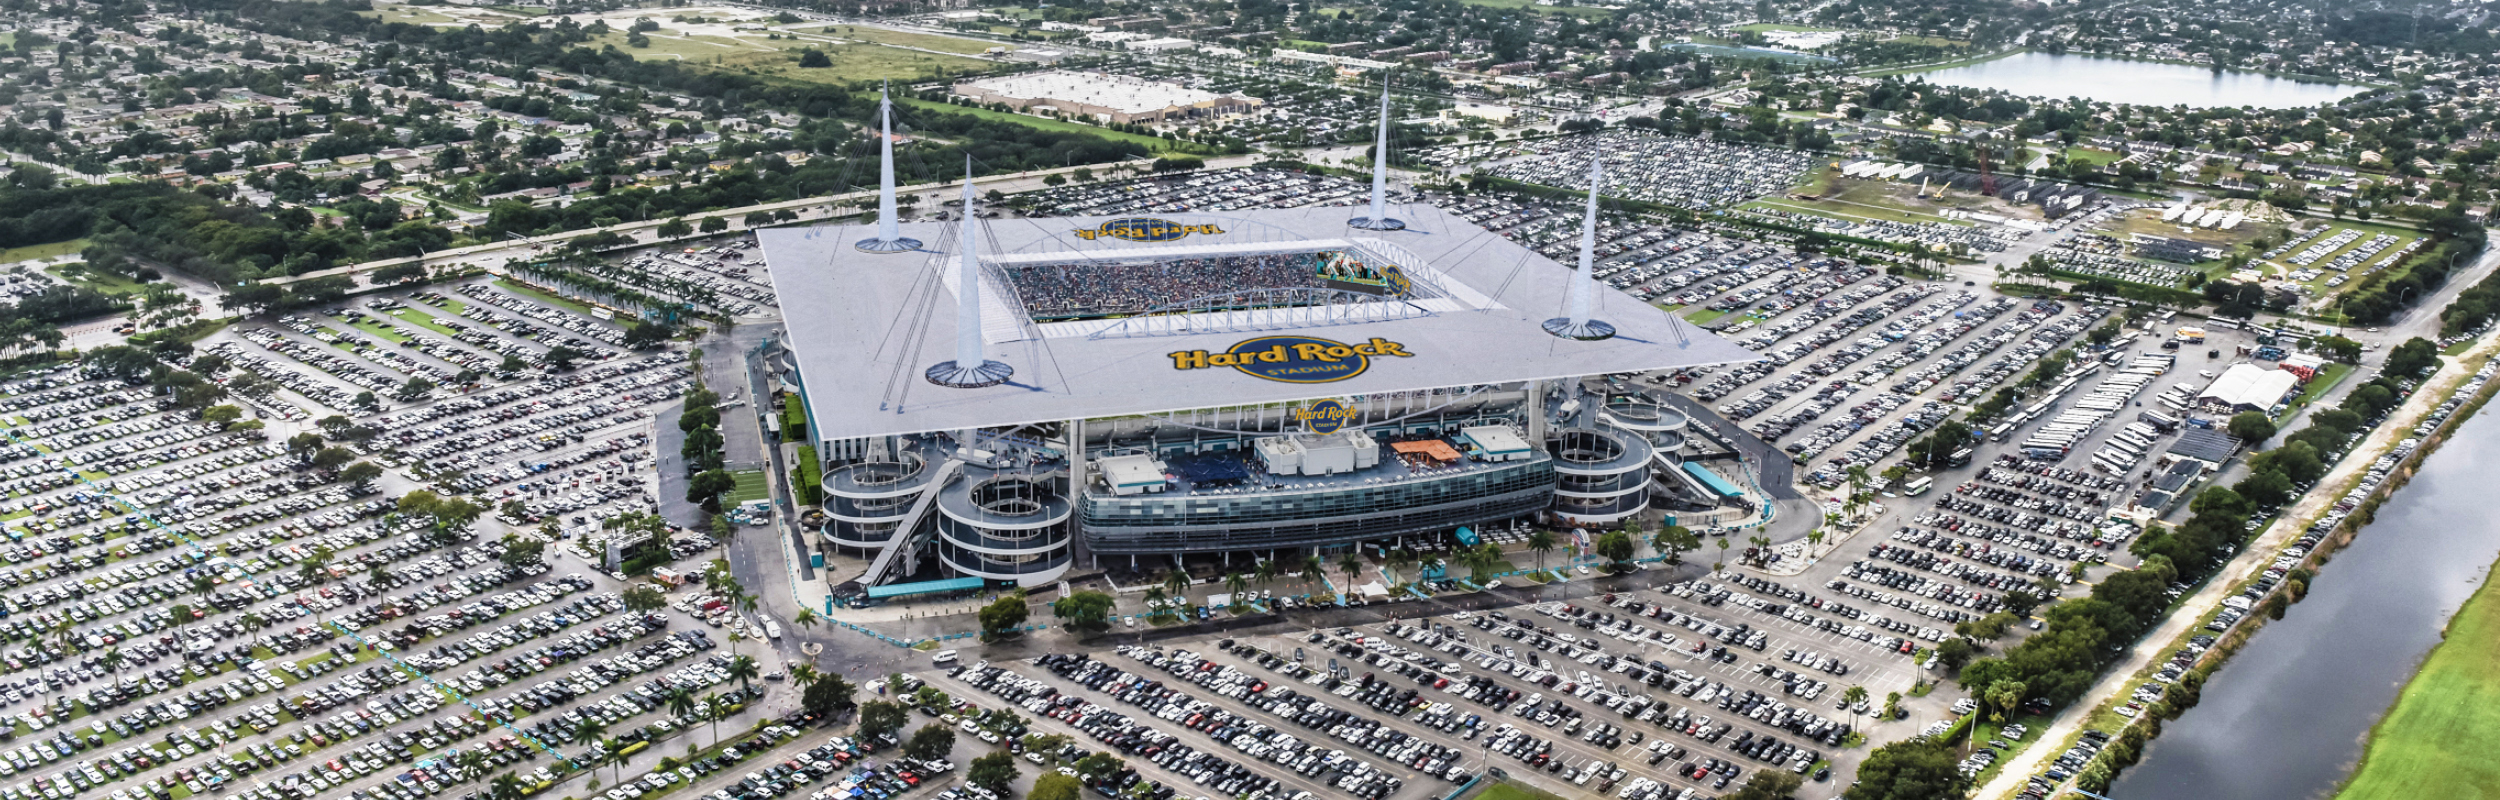 Hard Rock Stadium, Miami Gardens, Florida, United States